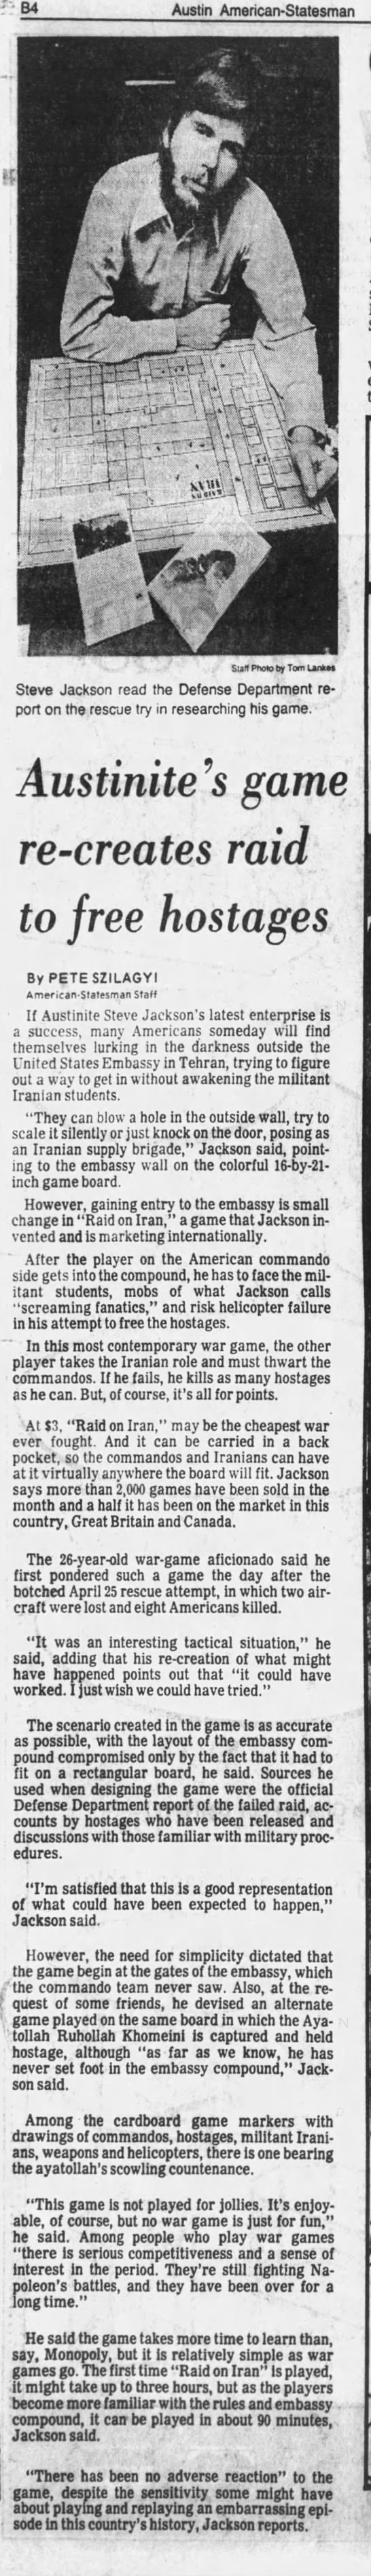 Austinite's Game Re-creates Raid to Free Hostages - December 4, 1980 - 